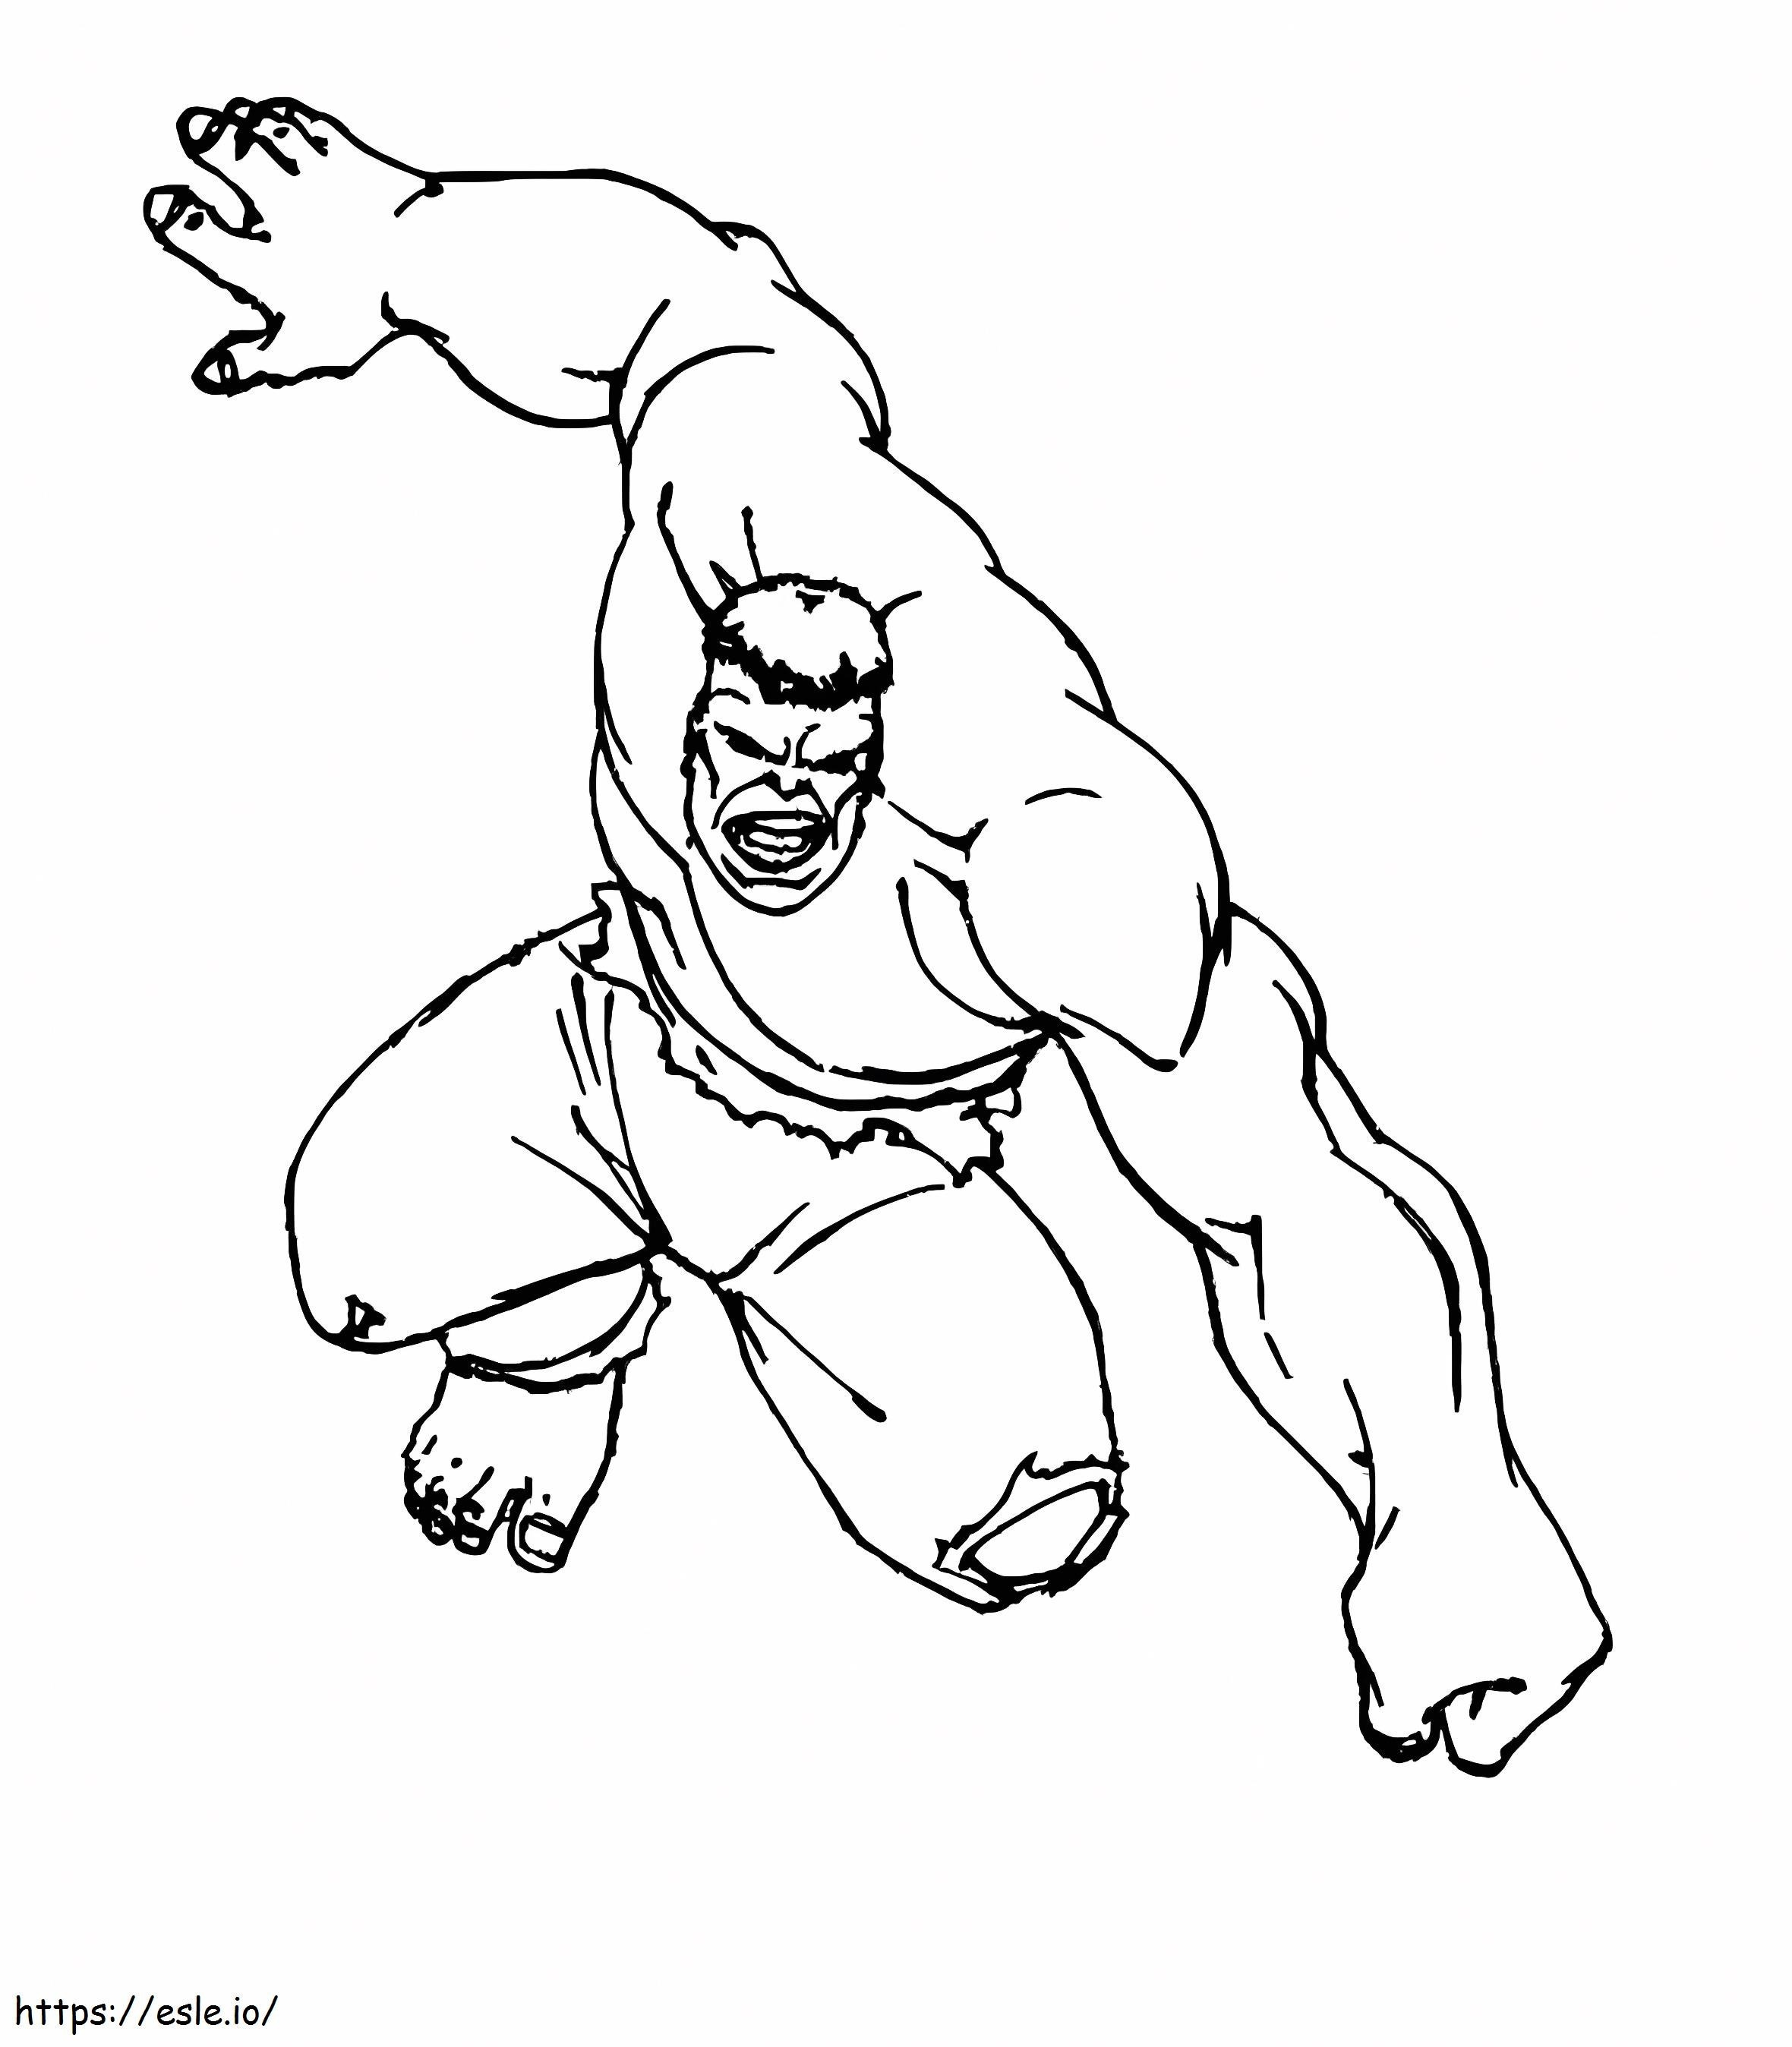 Ataques do Hulk para colorir